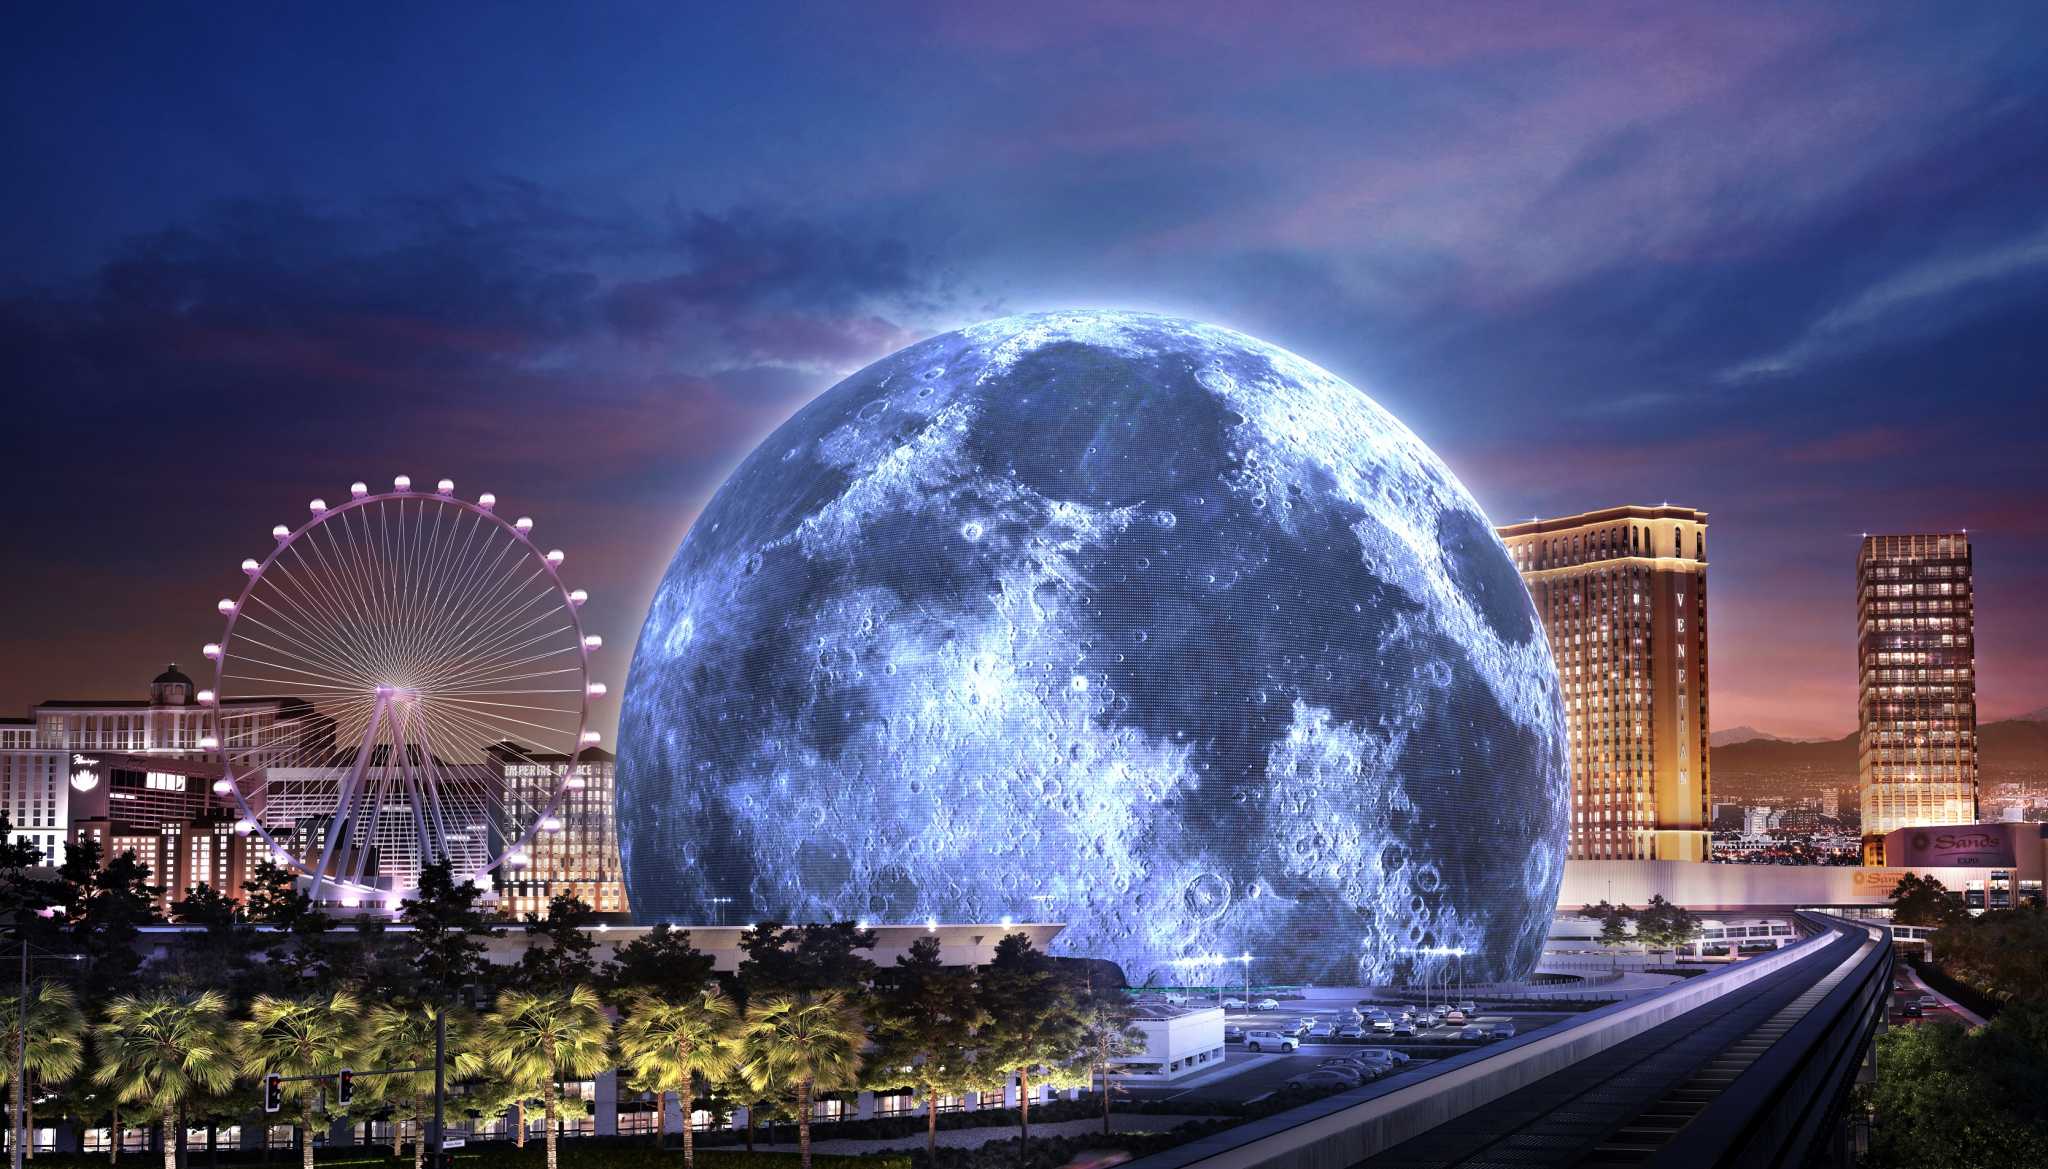 Mandalay Bay Resort & Casino in Las Vegas (NV) - See 2023 Prices